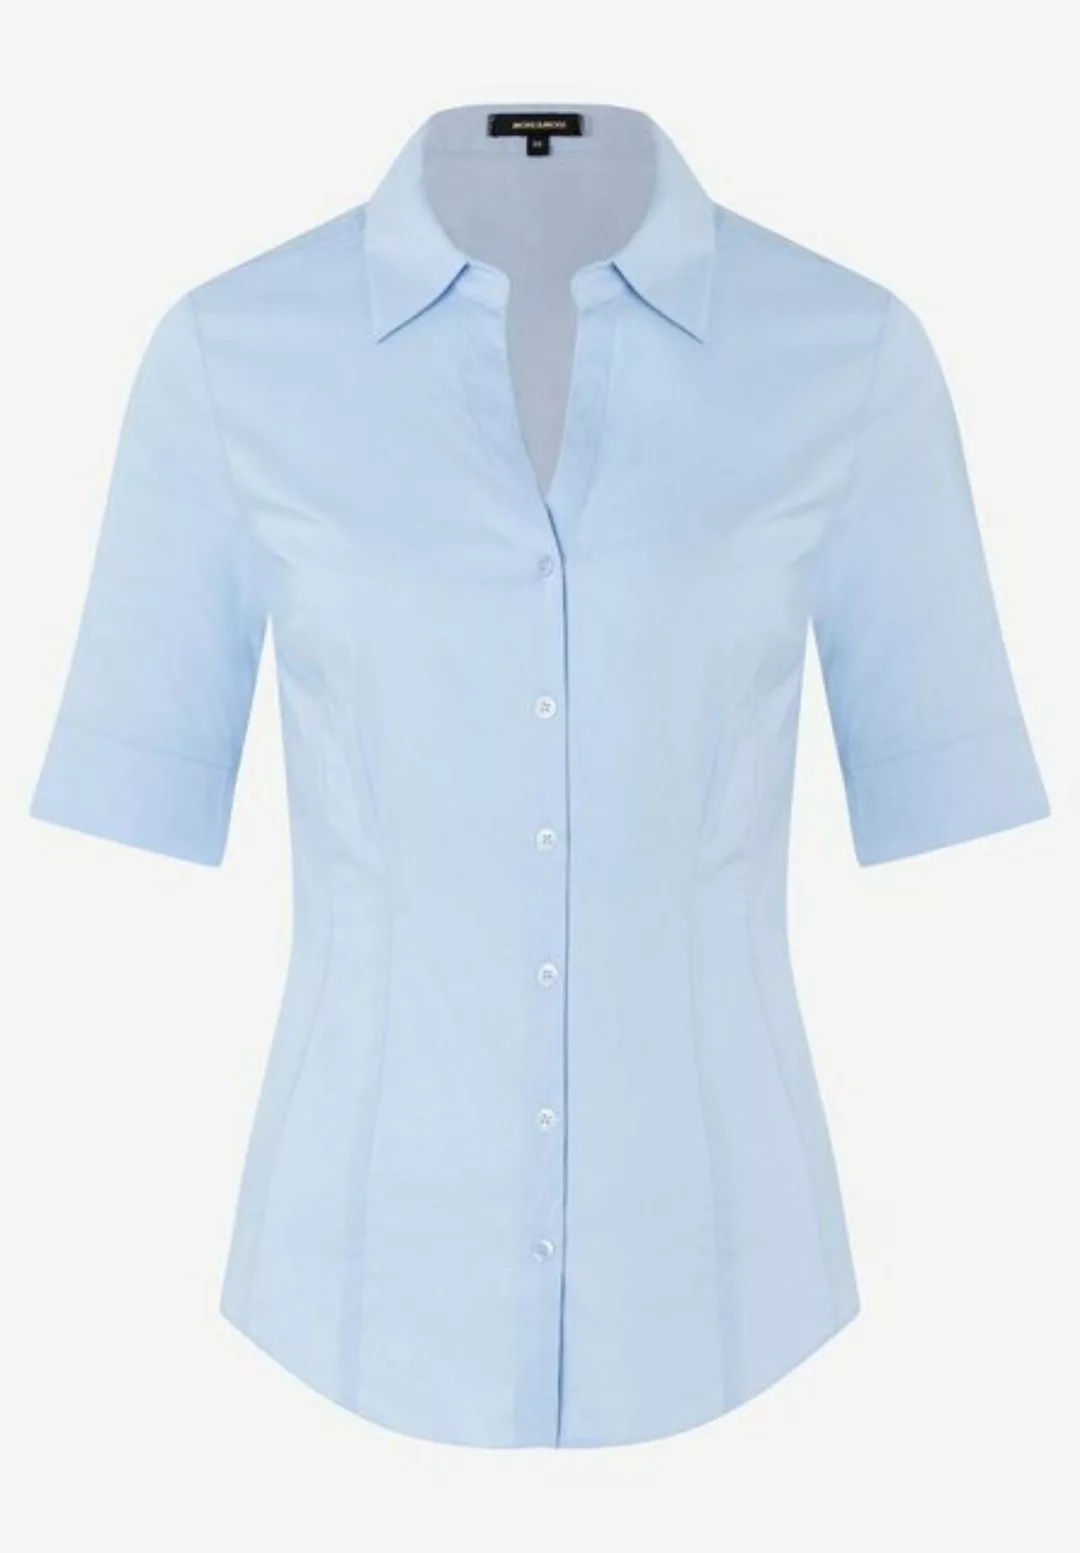 Baumwoll/Stretch Bluse, hellblau günstig online kaufen